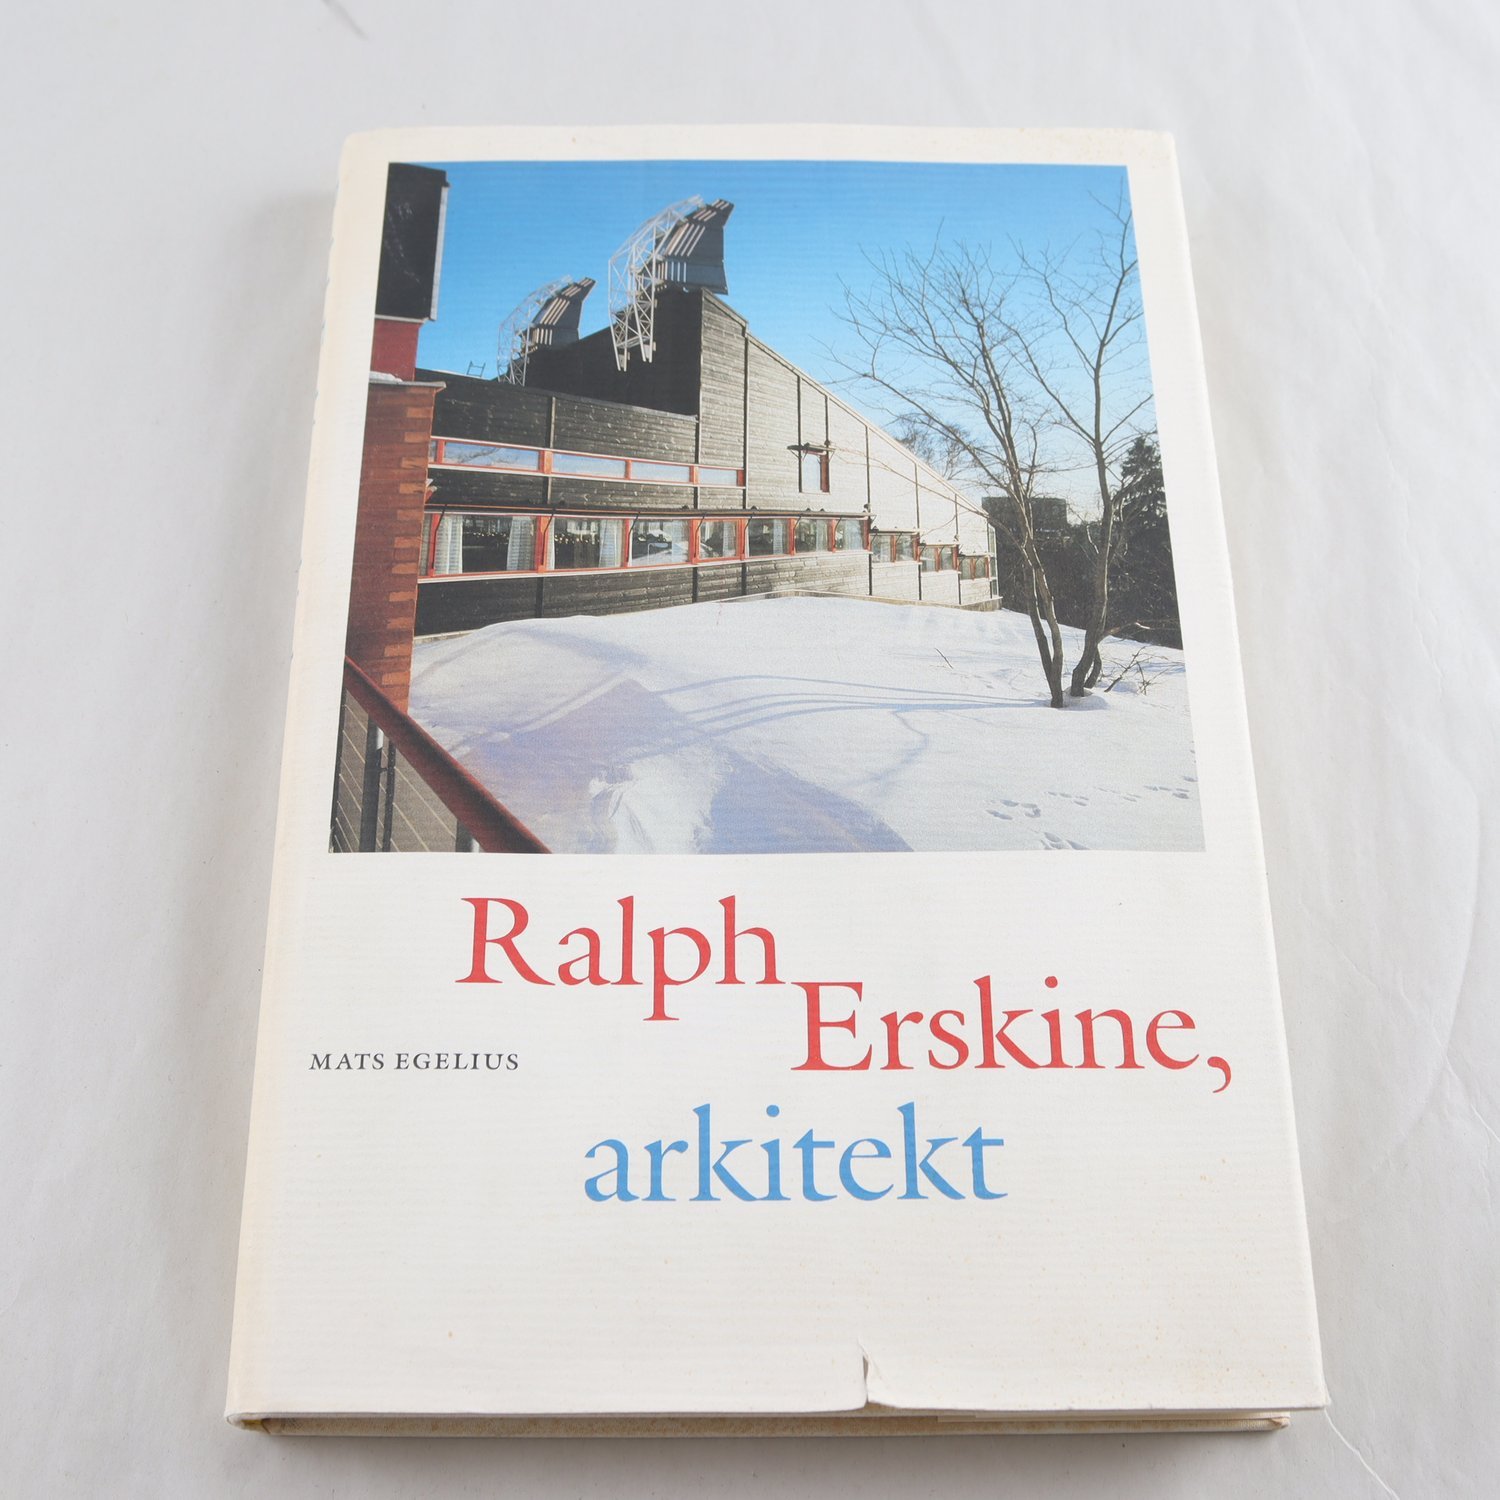 Ralph Erskine, arkitekt, Mats Egelius